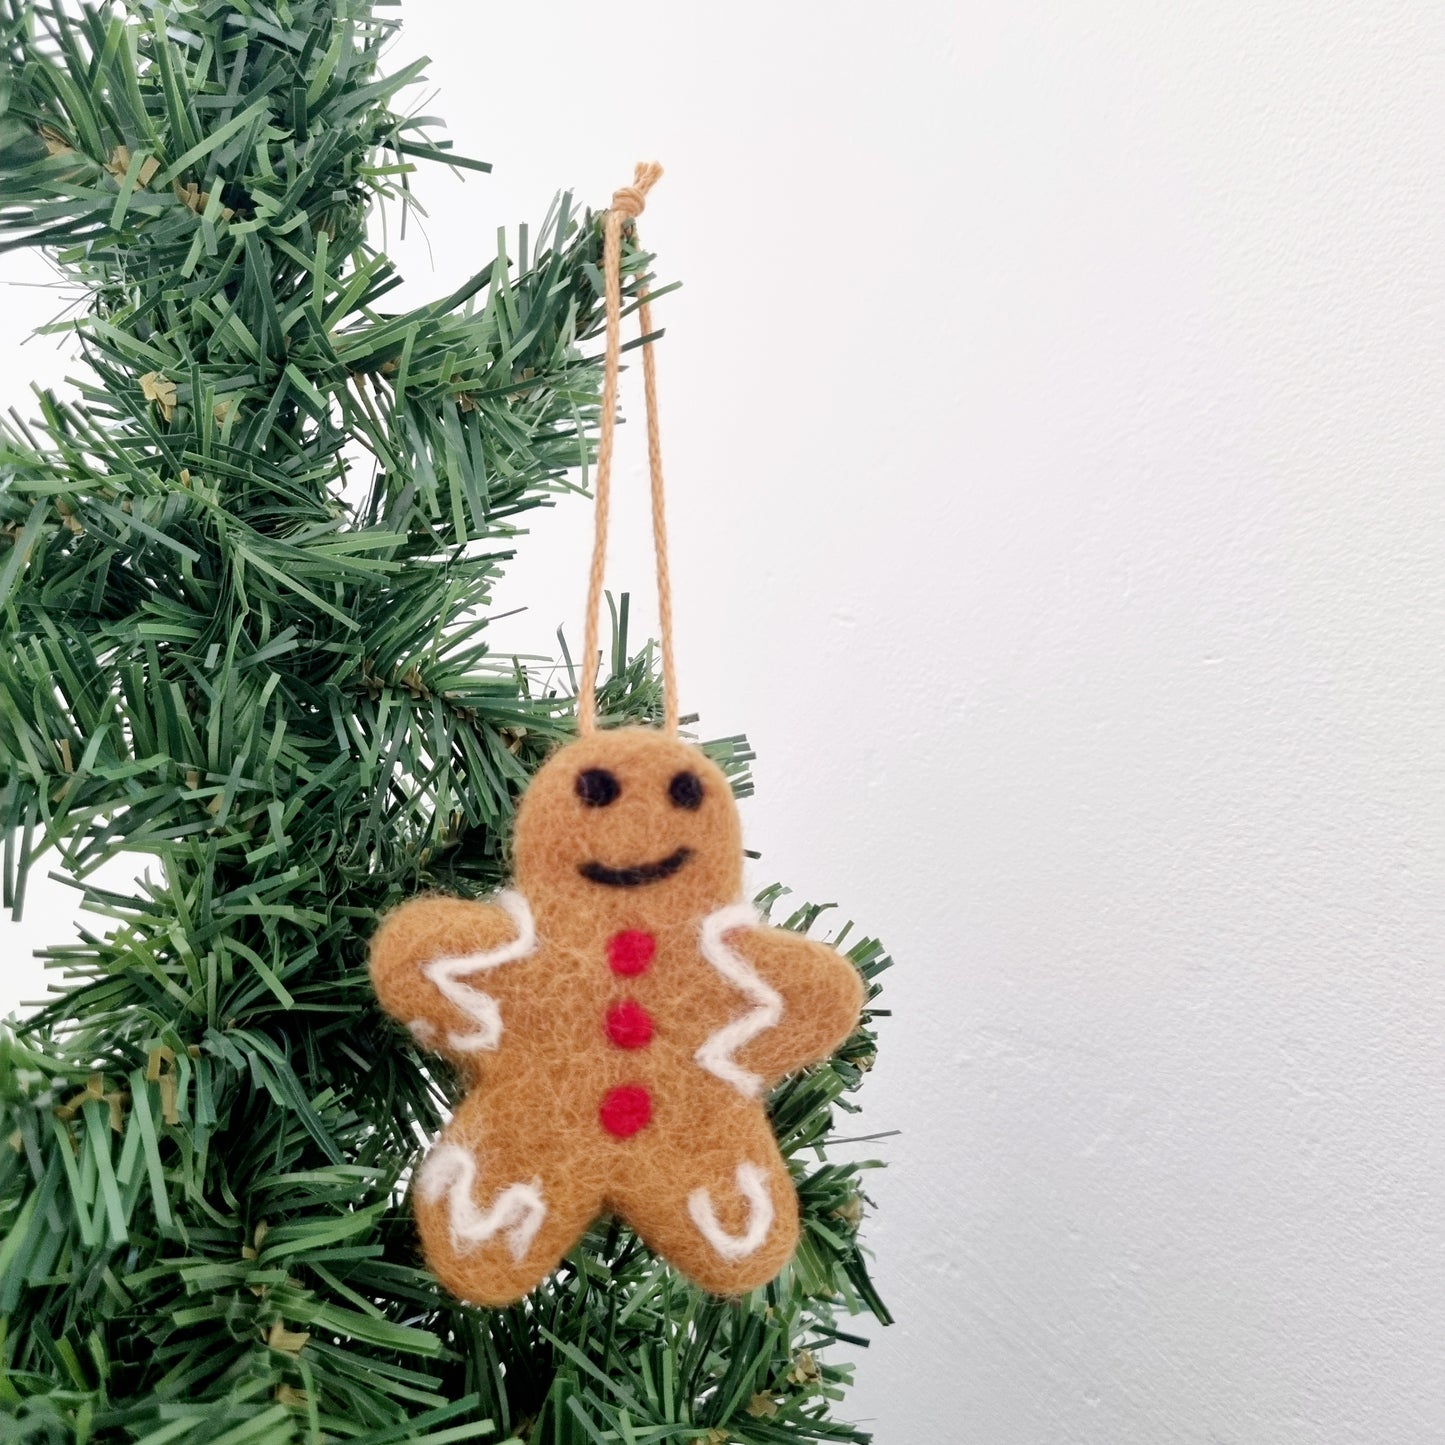 Felted Christmas Gingerbread - Christmas Tree Decor